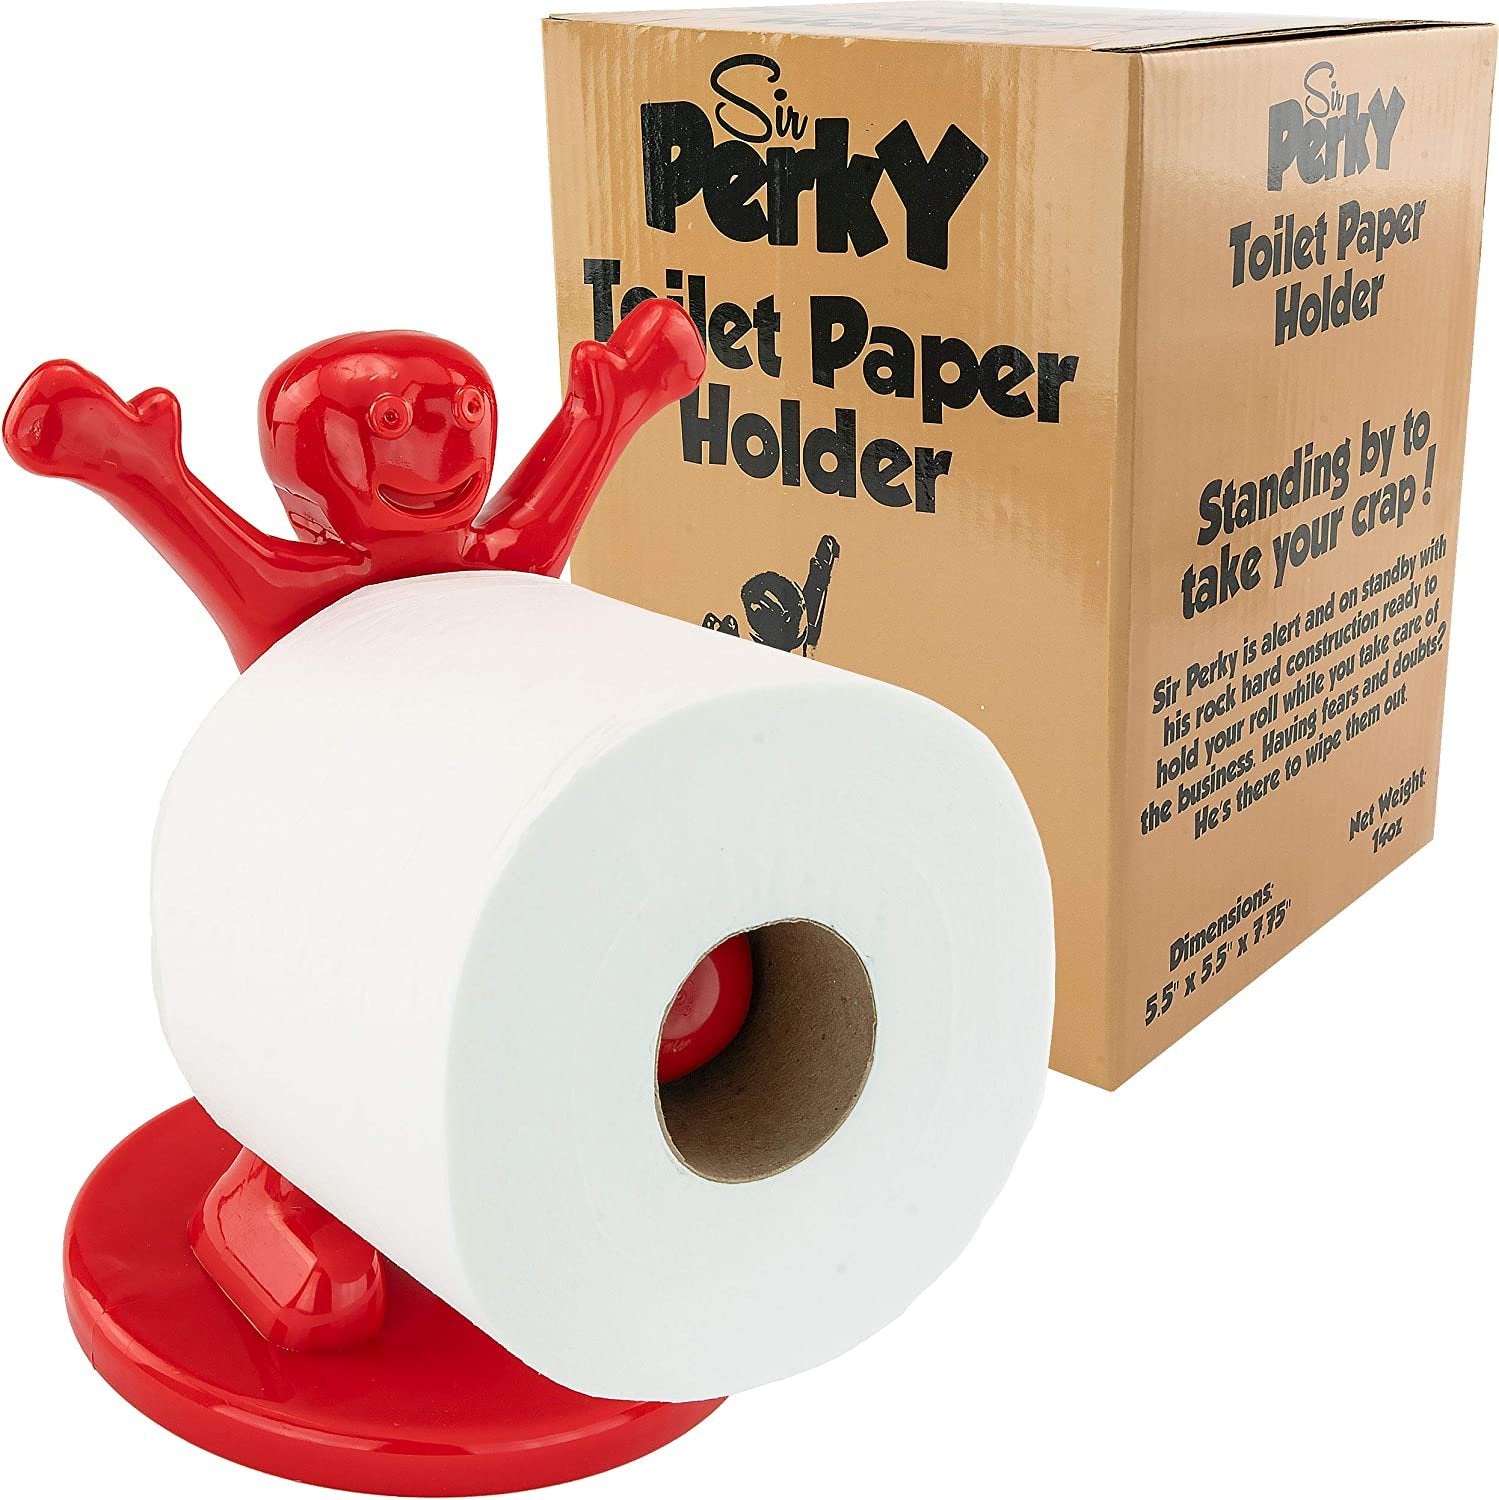 Sir Perky Toilet Paper Holder Fairly Odd Funny Raunchy Novelty Gag Gift/Present